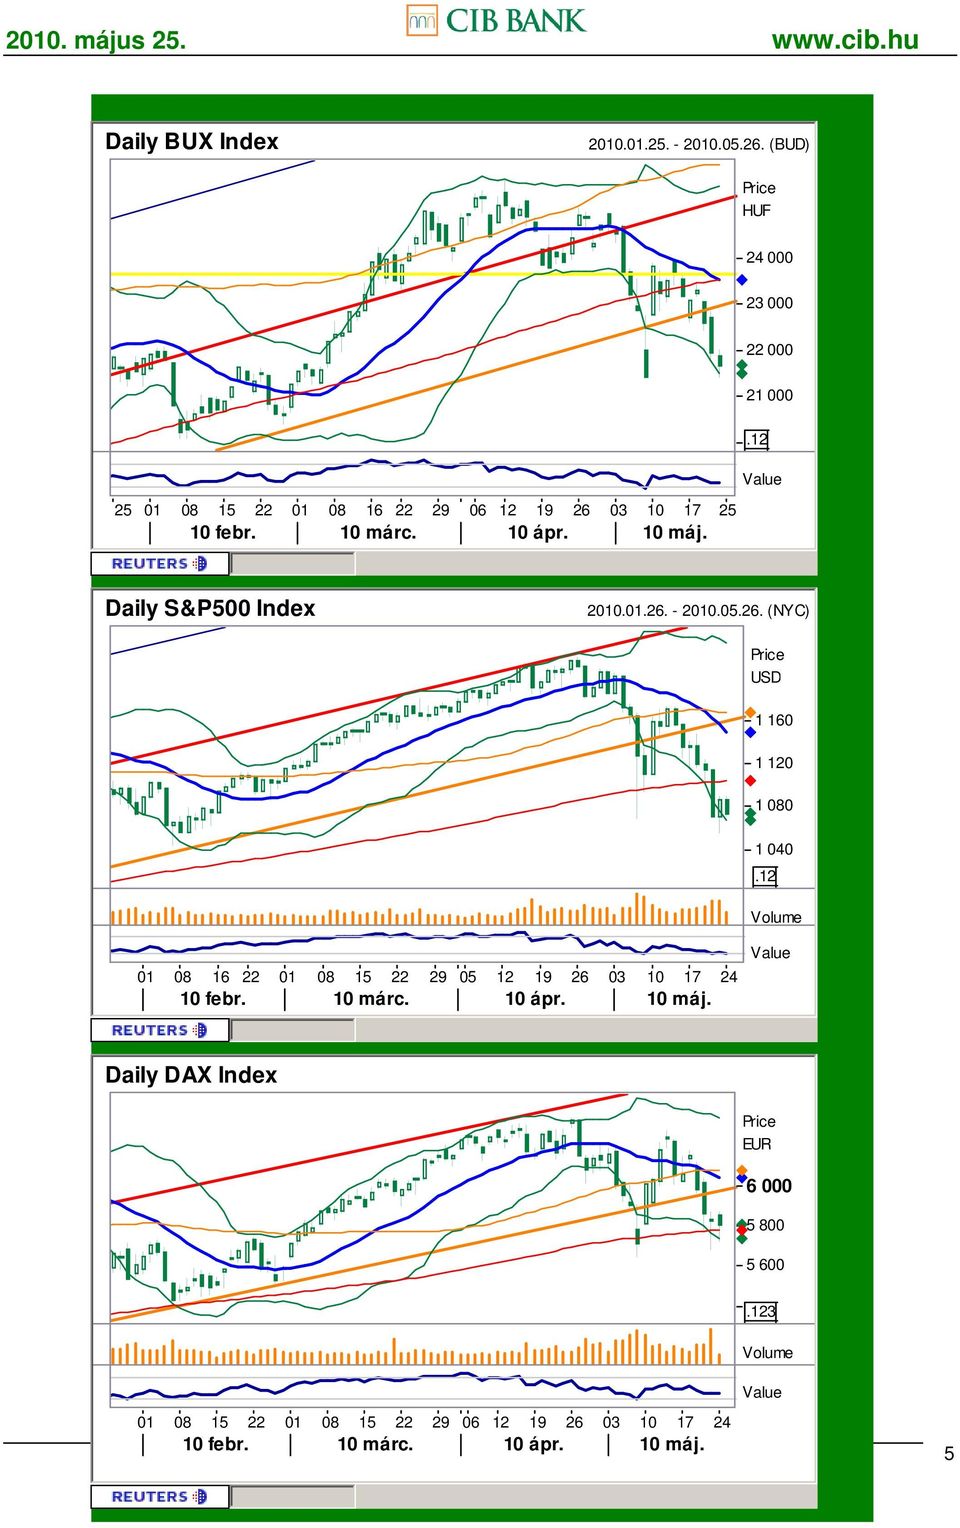 10 ápr. 10 máj. Daily S&P500 Index 2010.01.26.